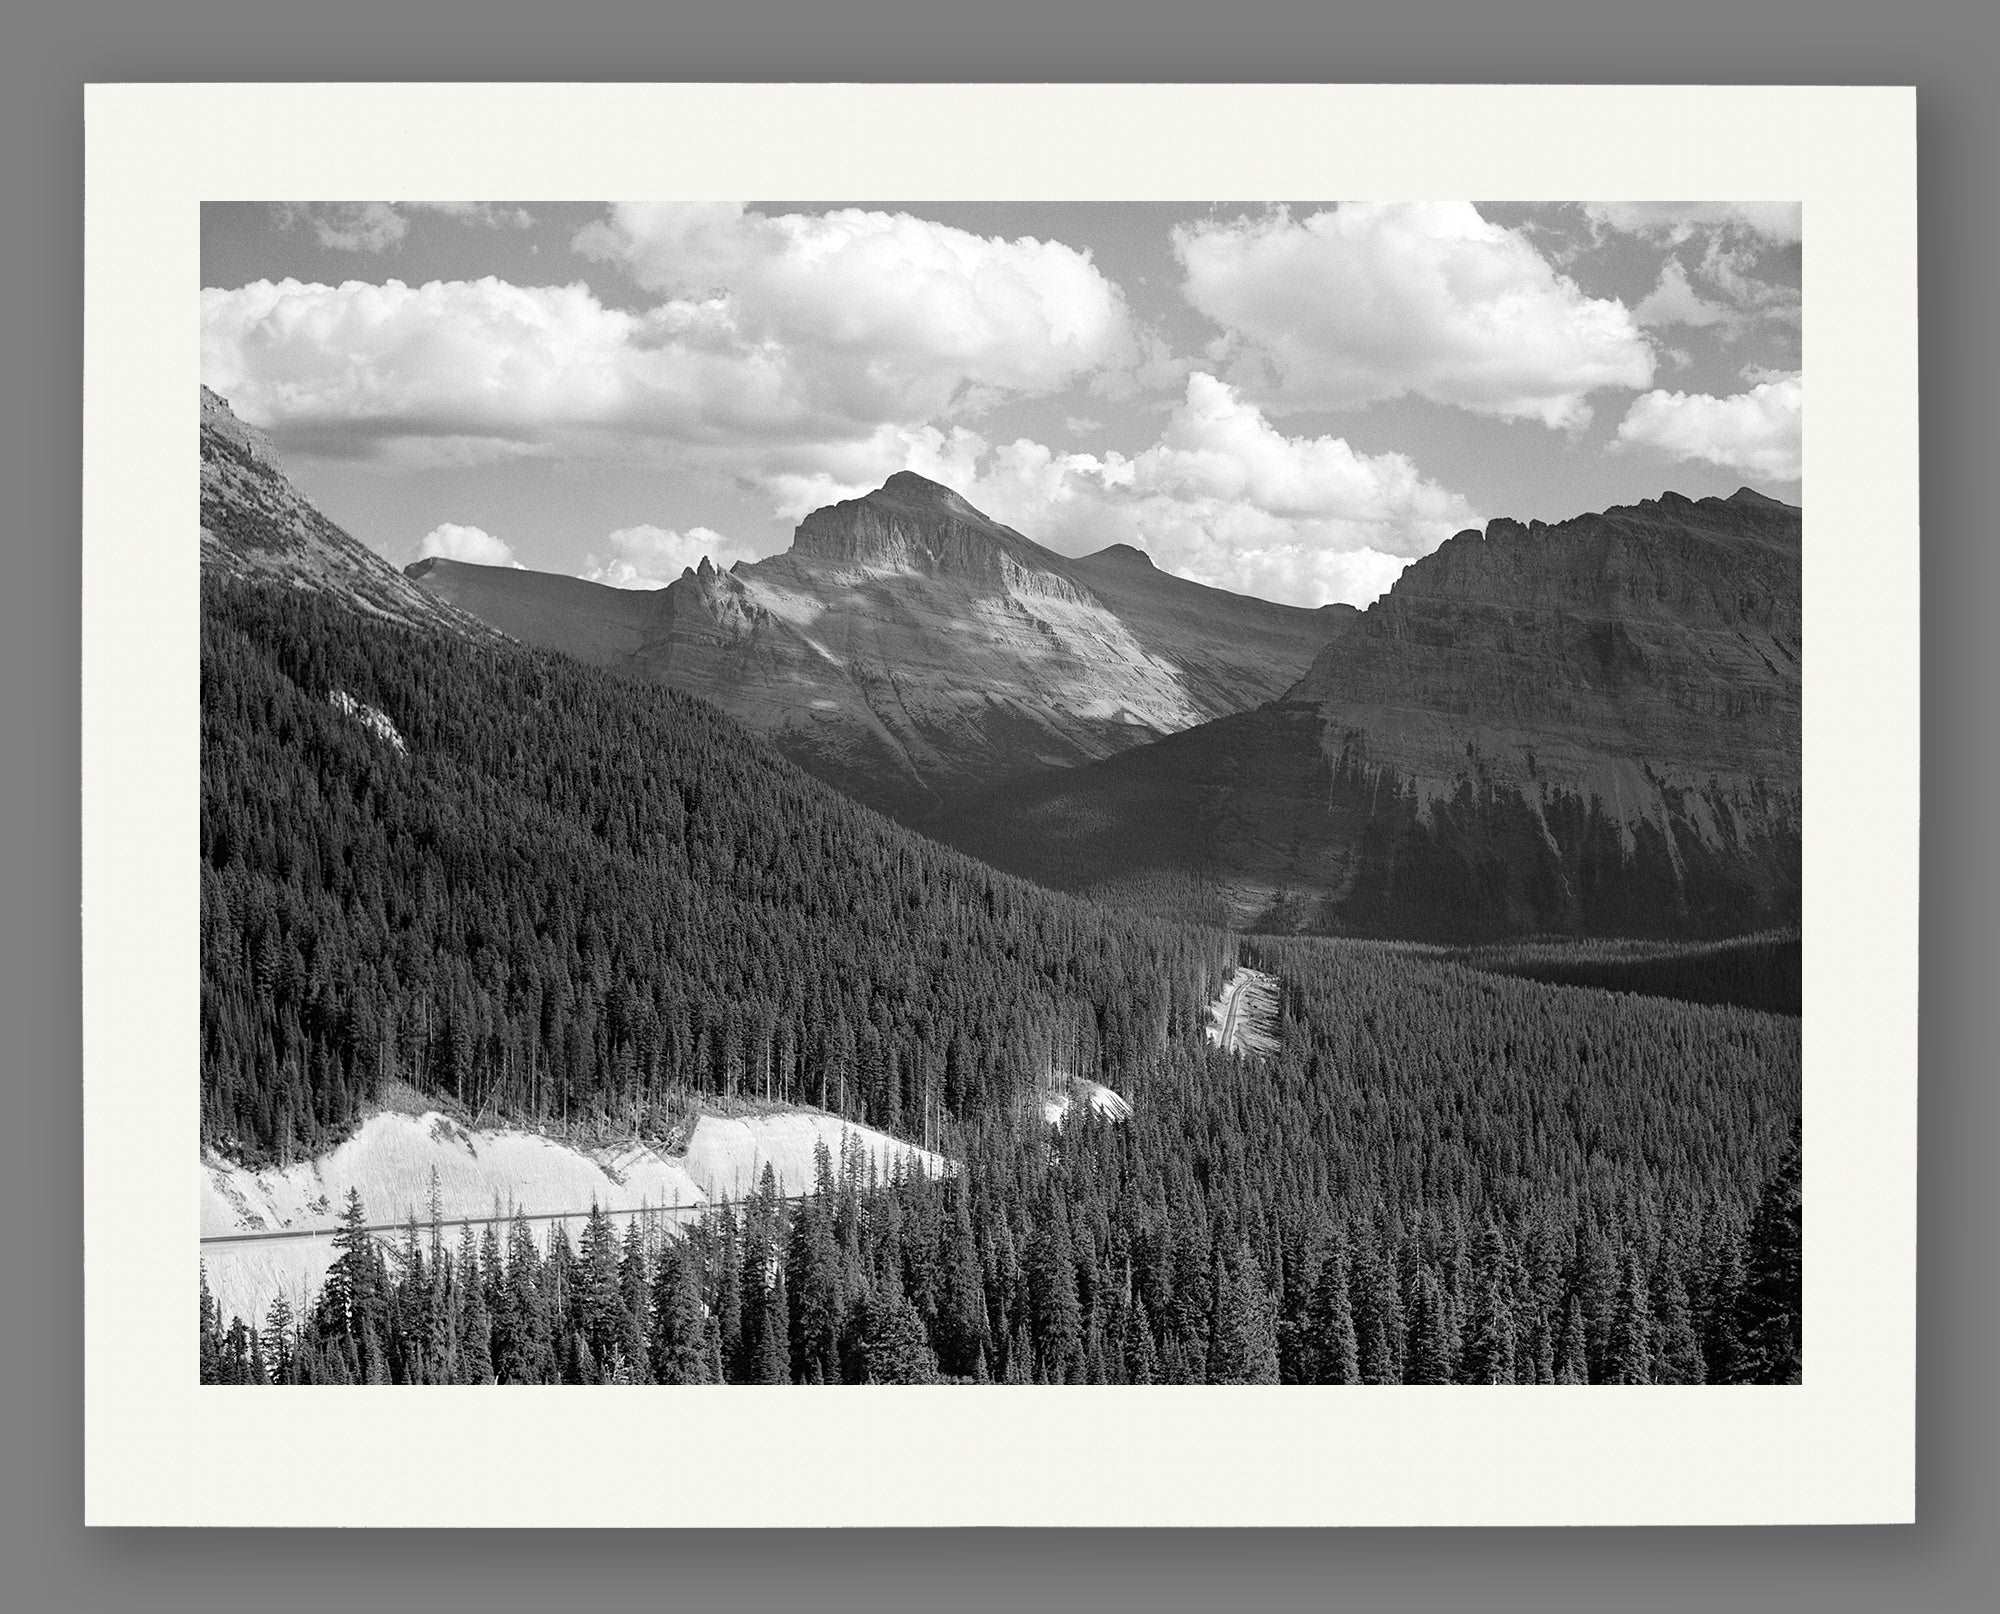 A fine art paper print of a vintage image of Glacier National Park